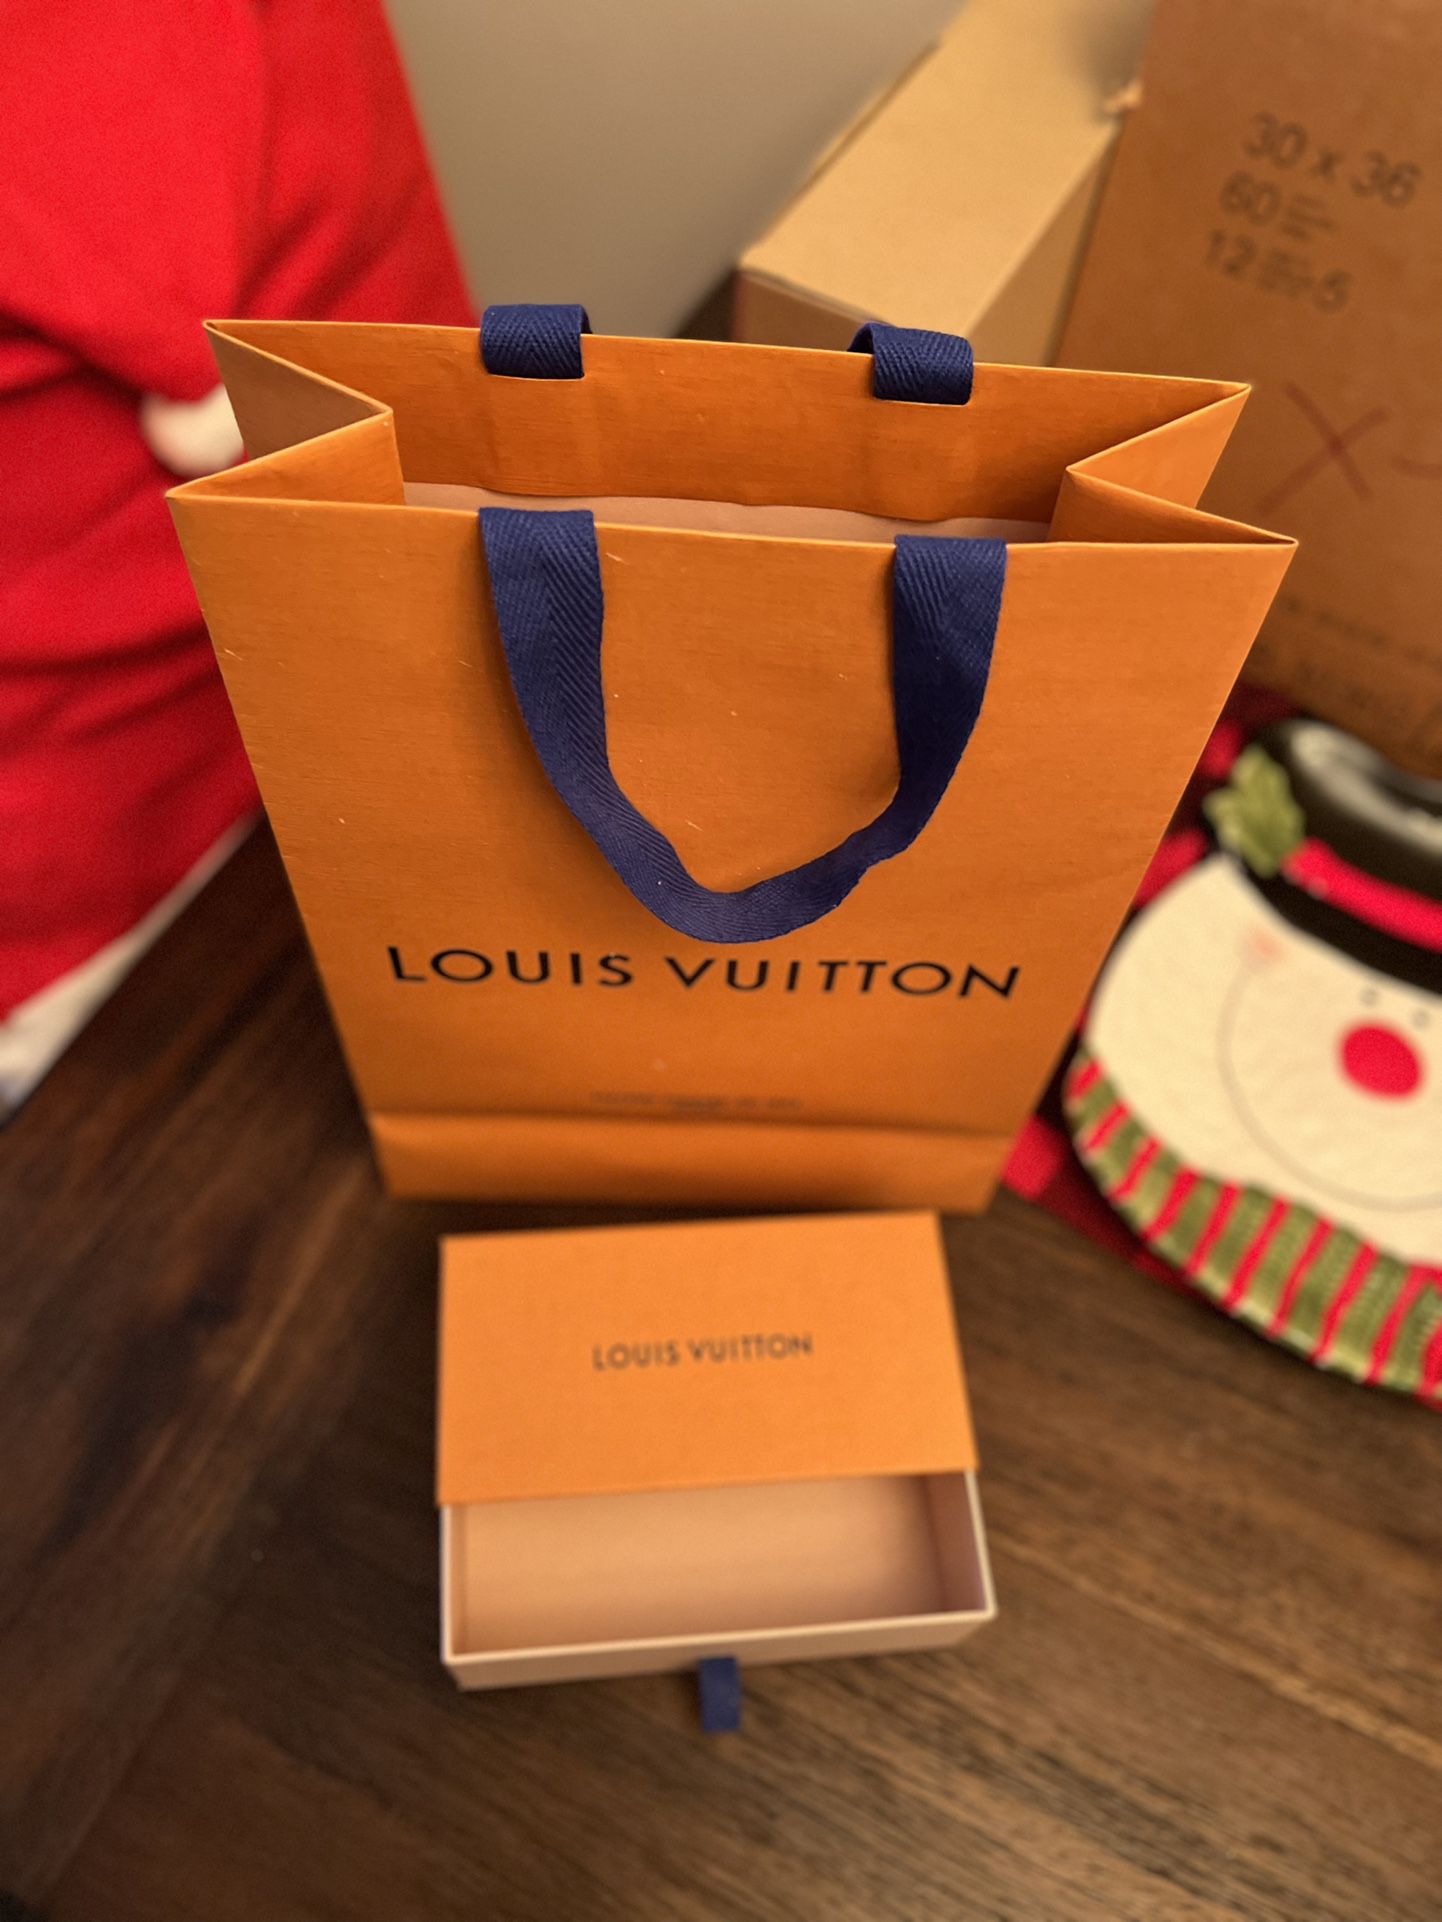 Louis Vuitton Tompkins Square Tote for Sale in Phoenix, AZ - OfferUp